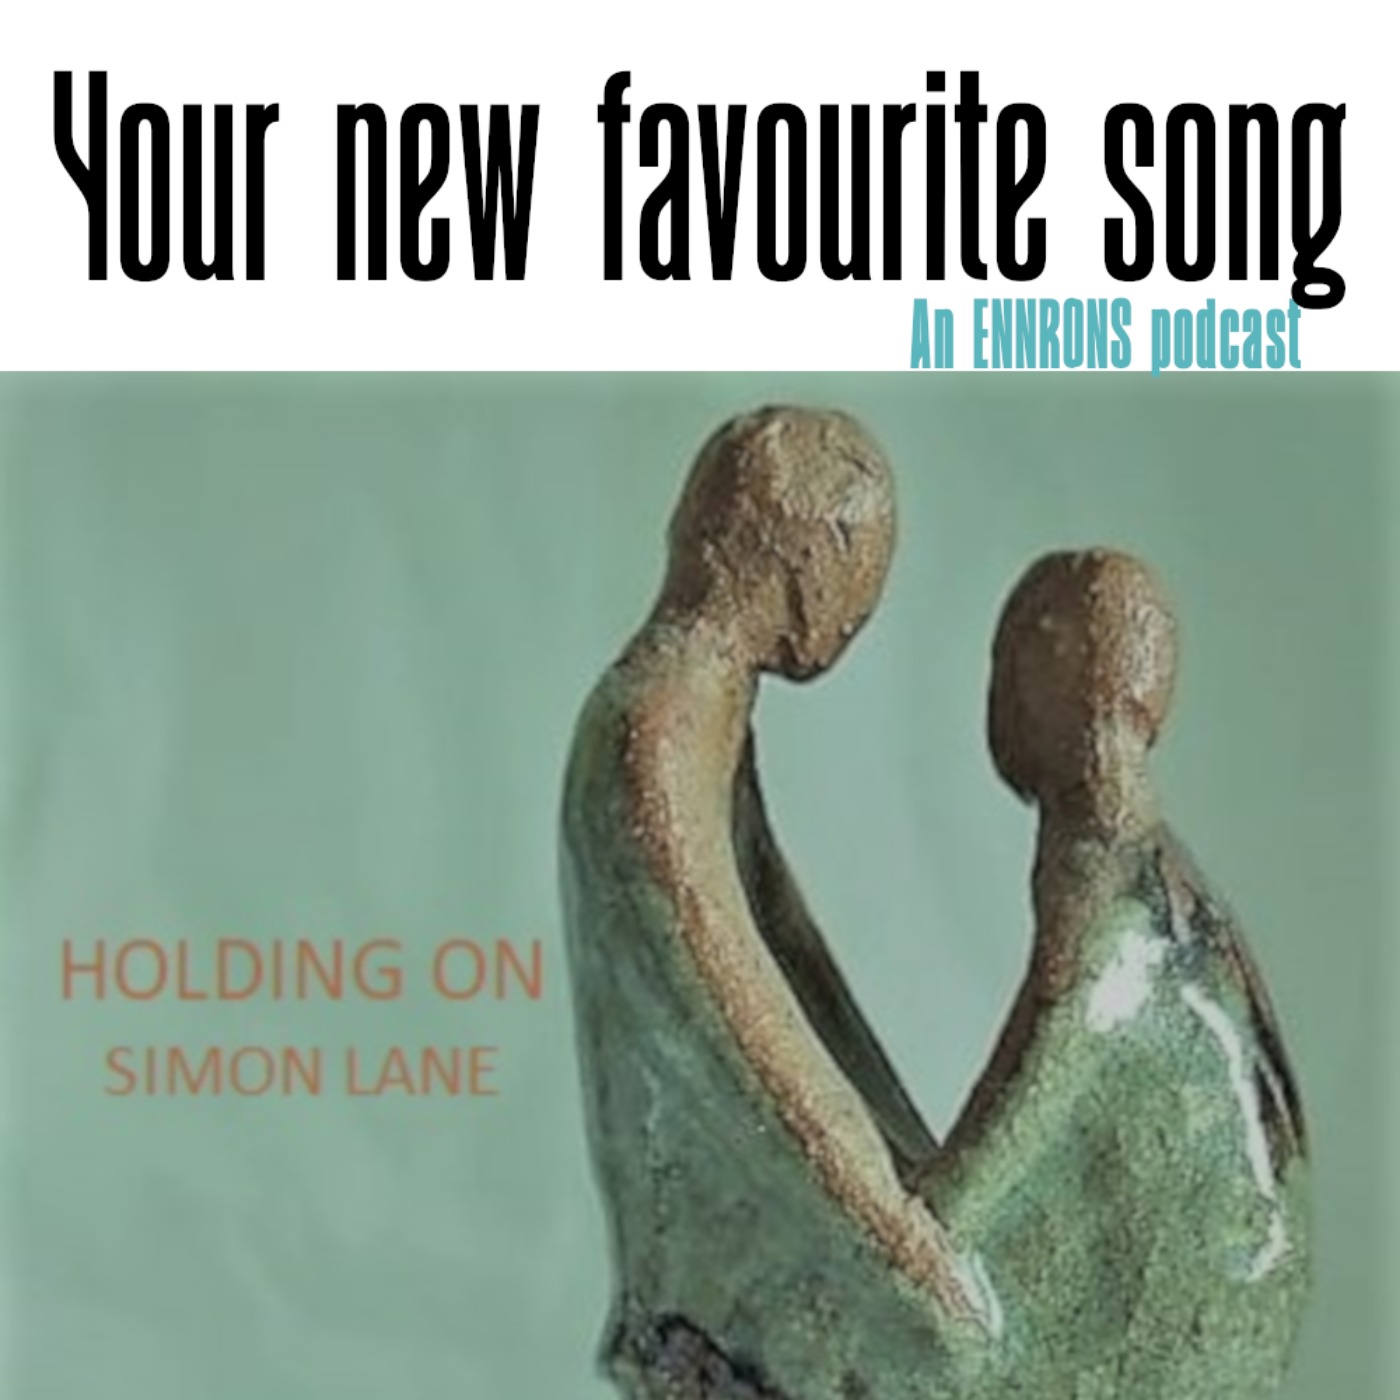 'Holding on' by Simon Lane